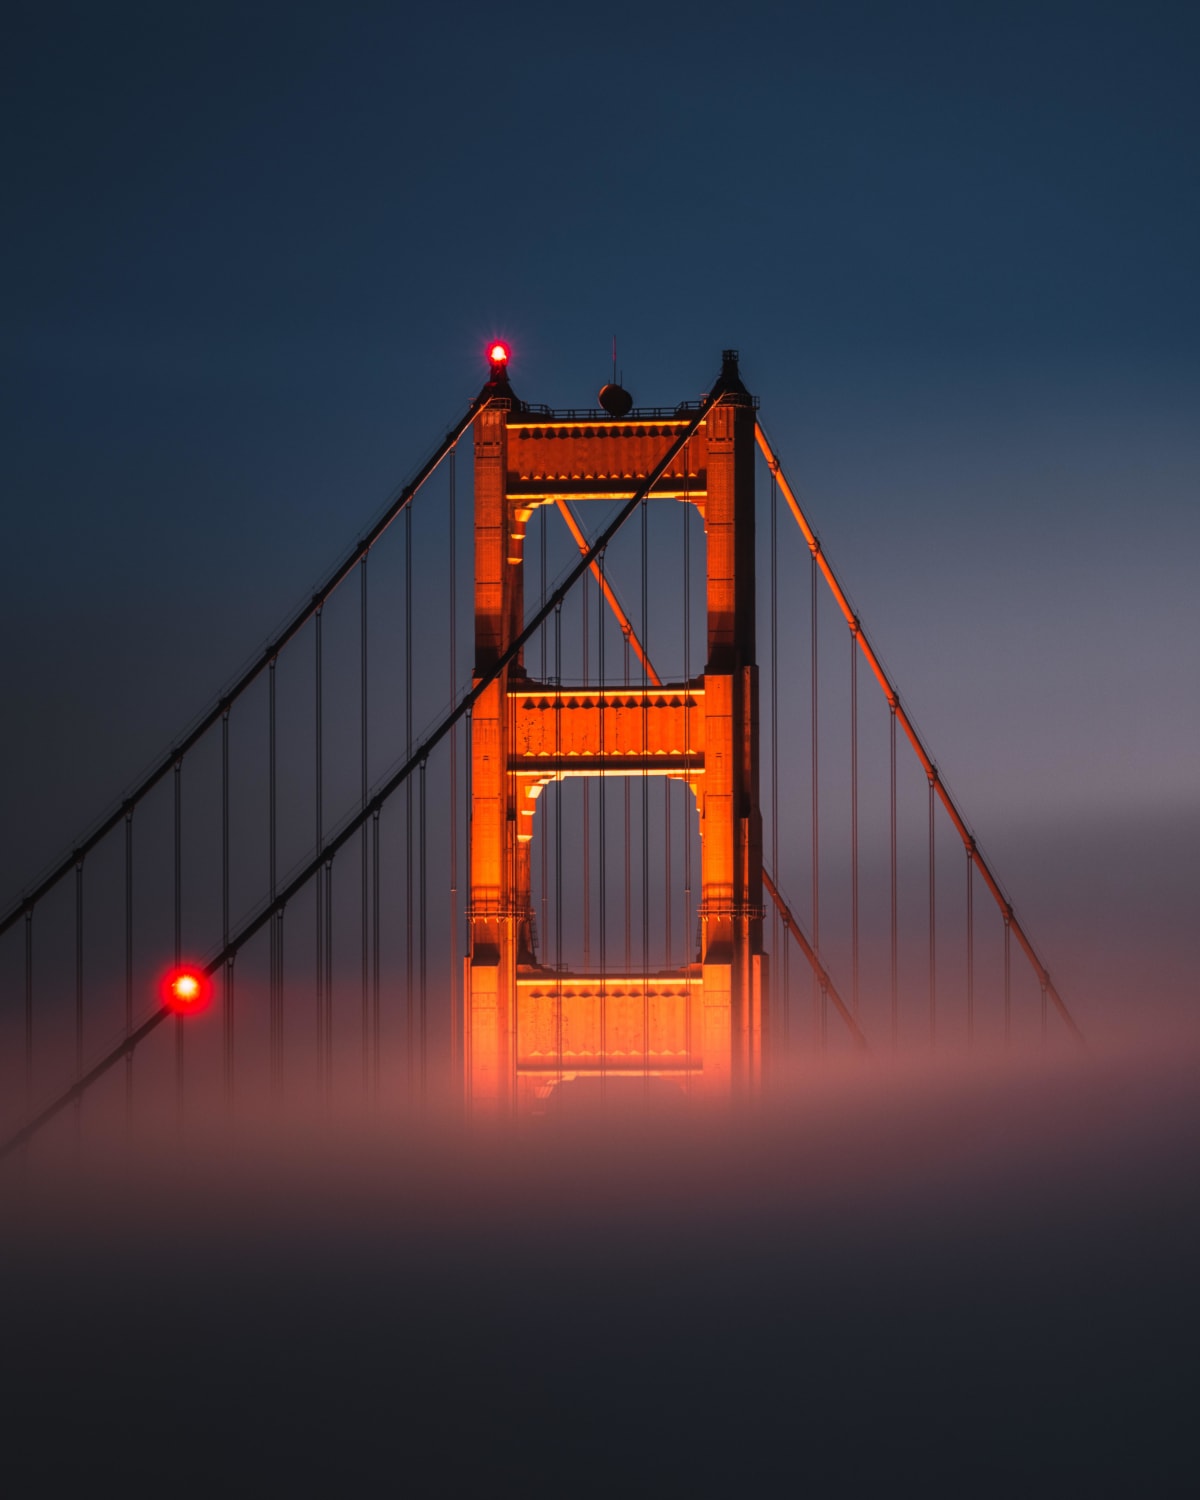 Low fog at the Golden Gate Bridge - San Francisco, CA